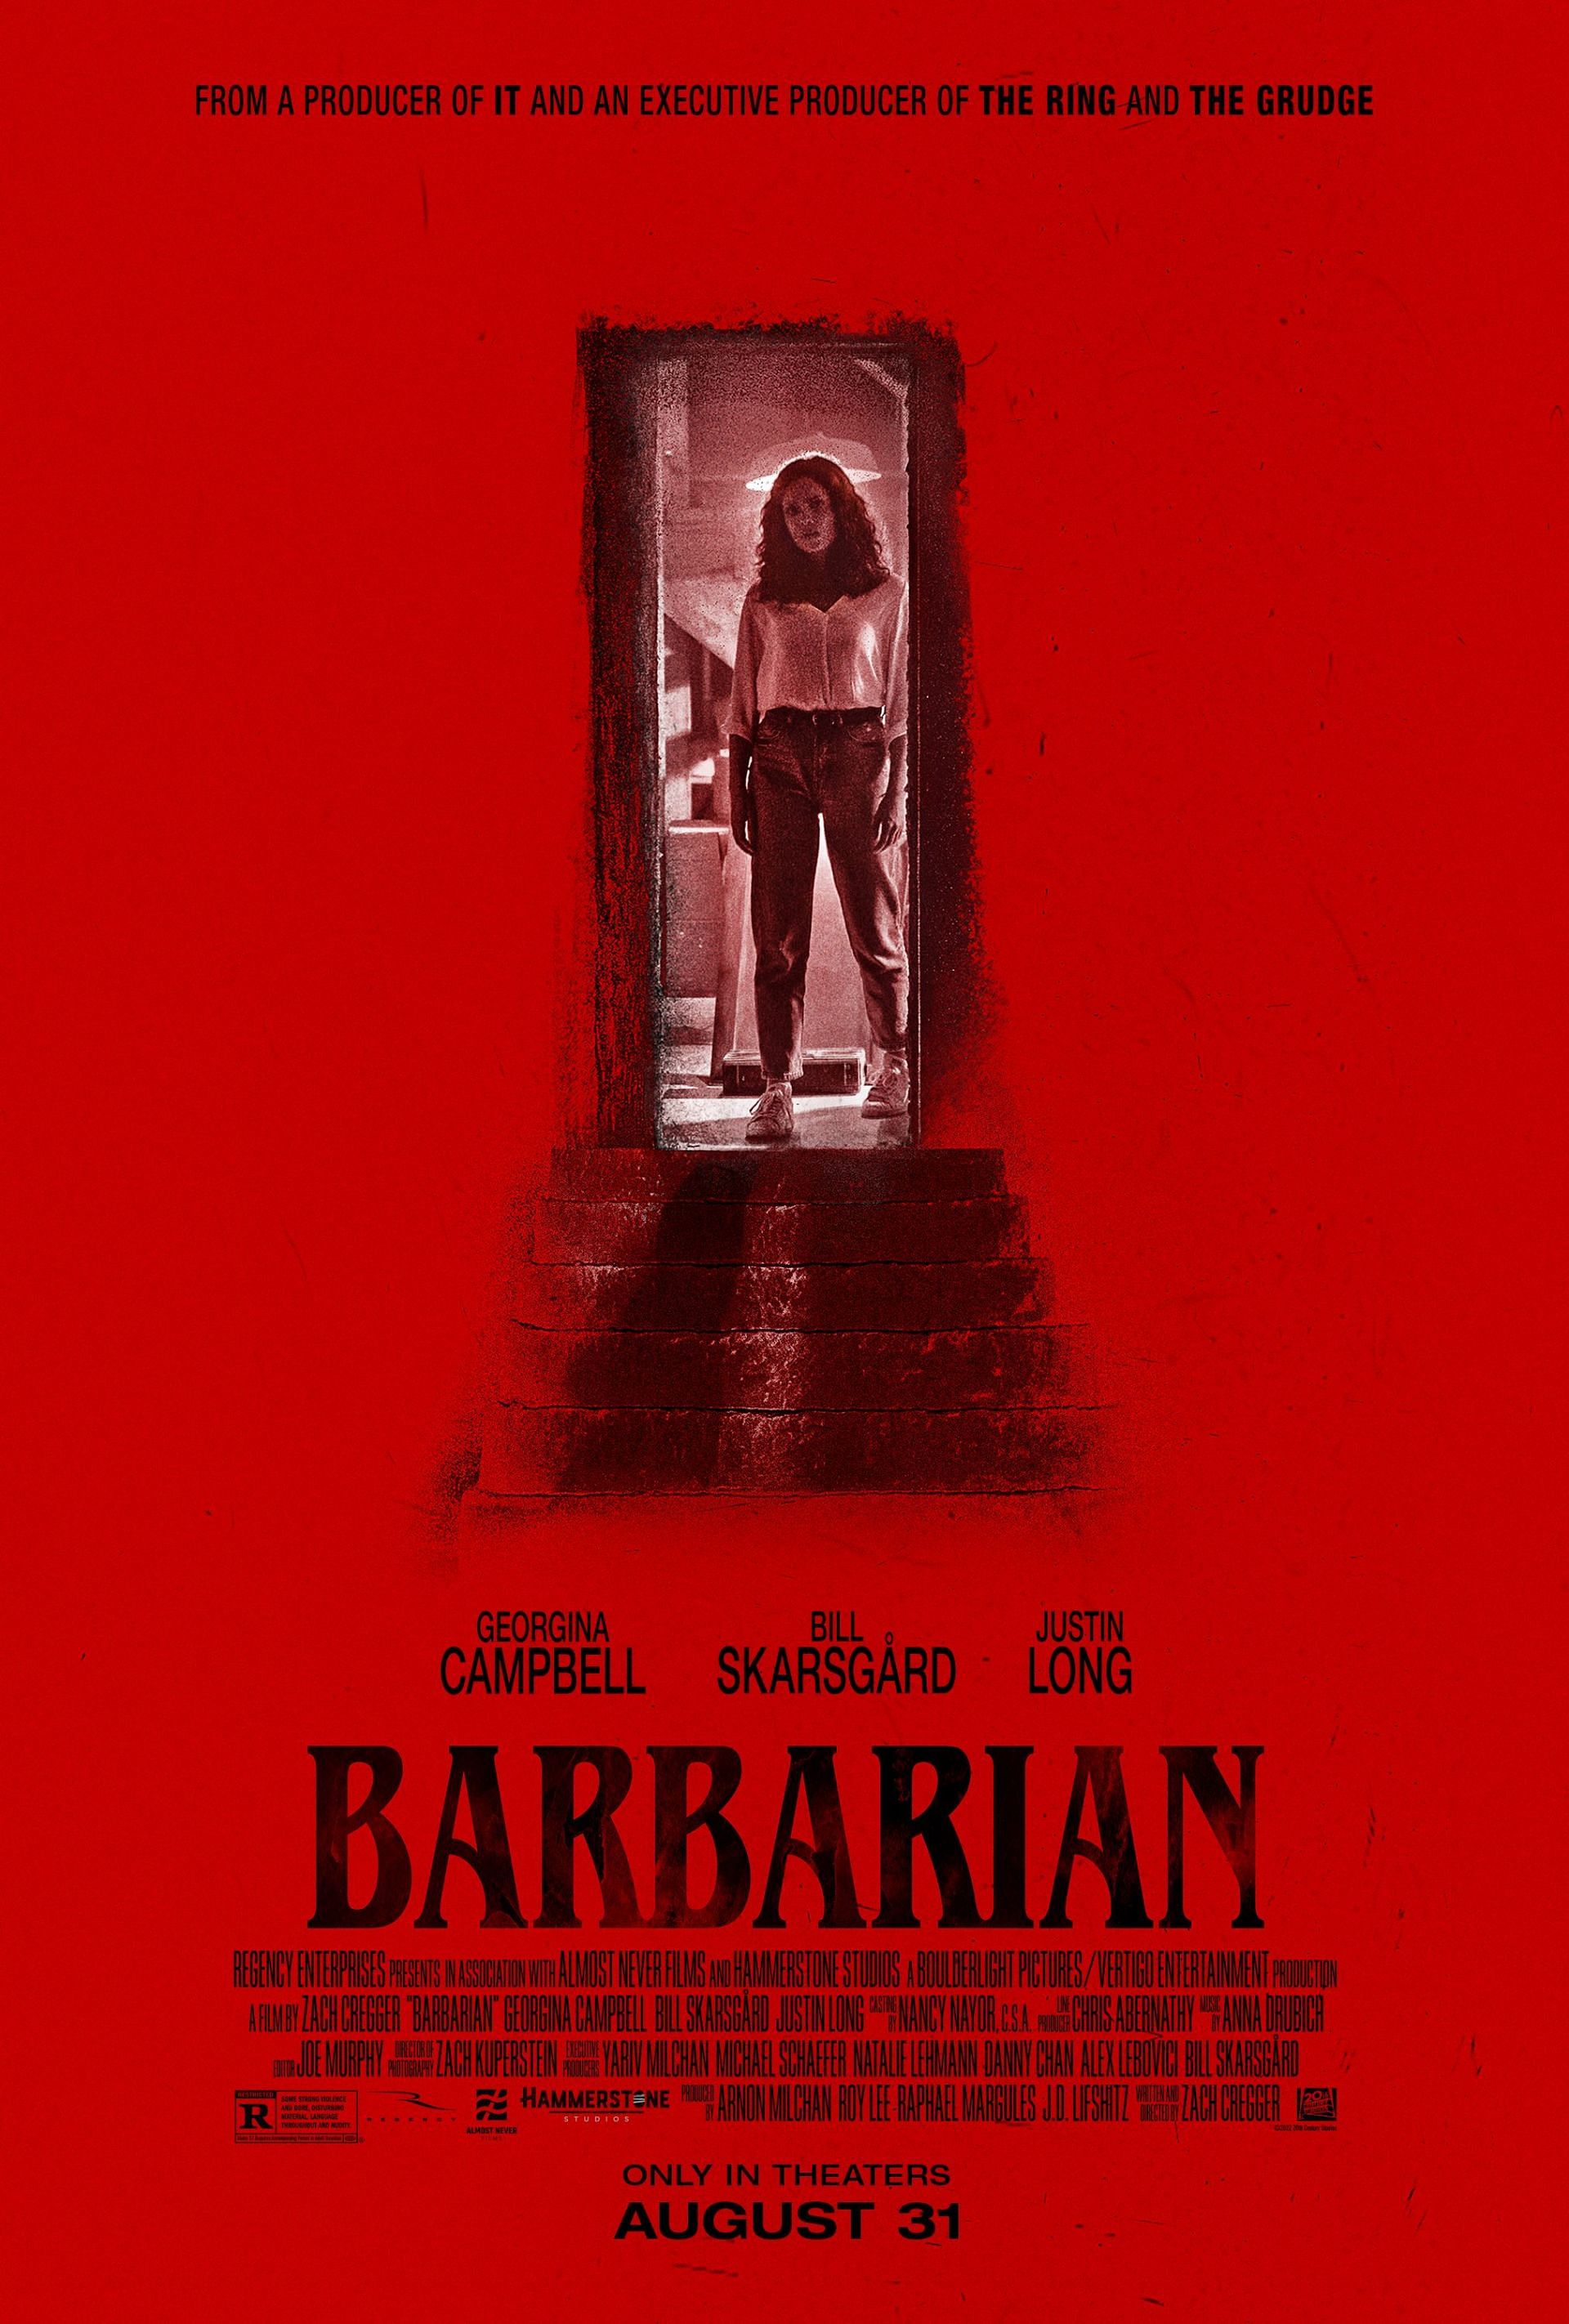 Barbarian (Image via 20th Century Studios)